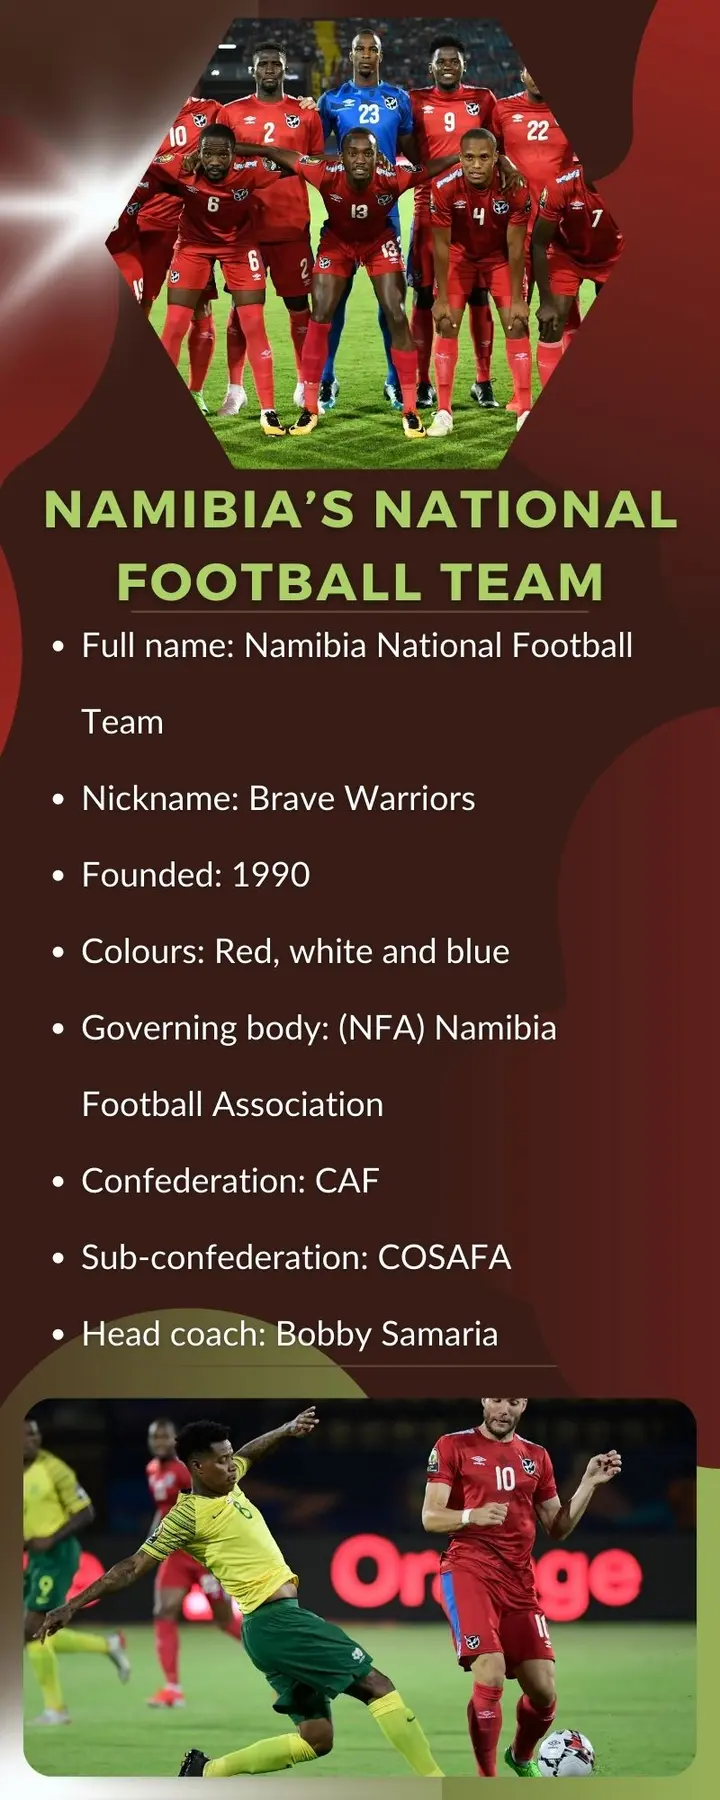 Namibia’s national football team